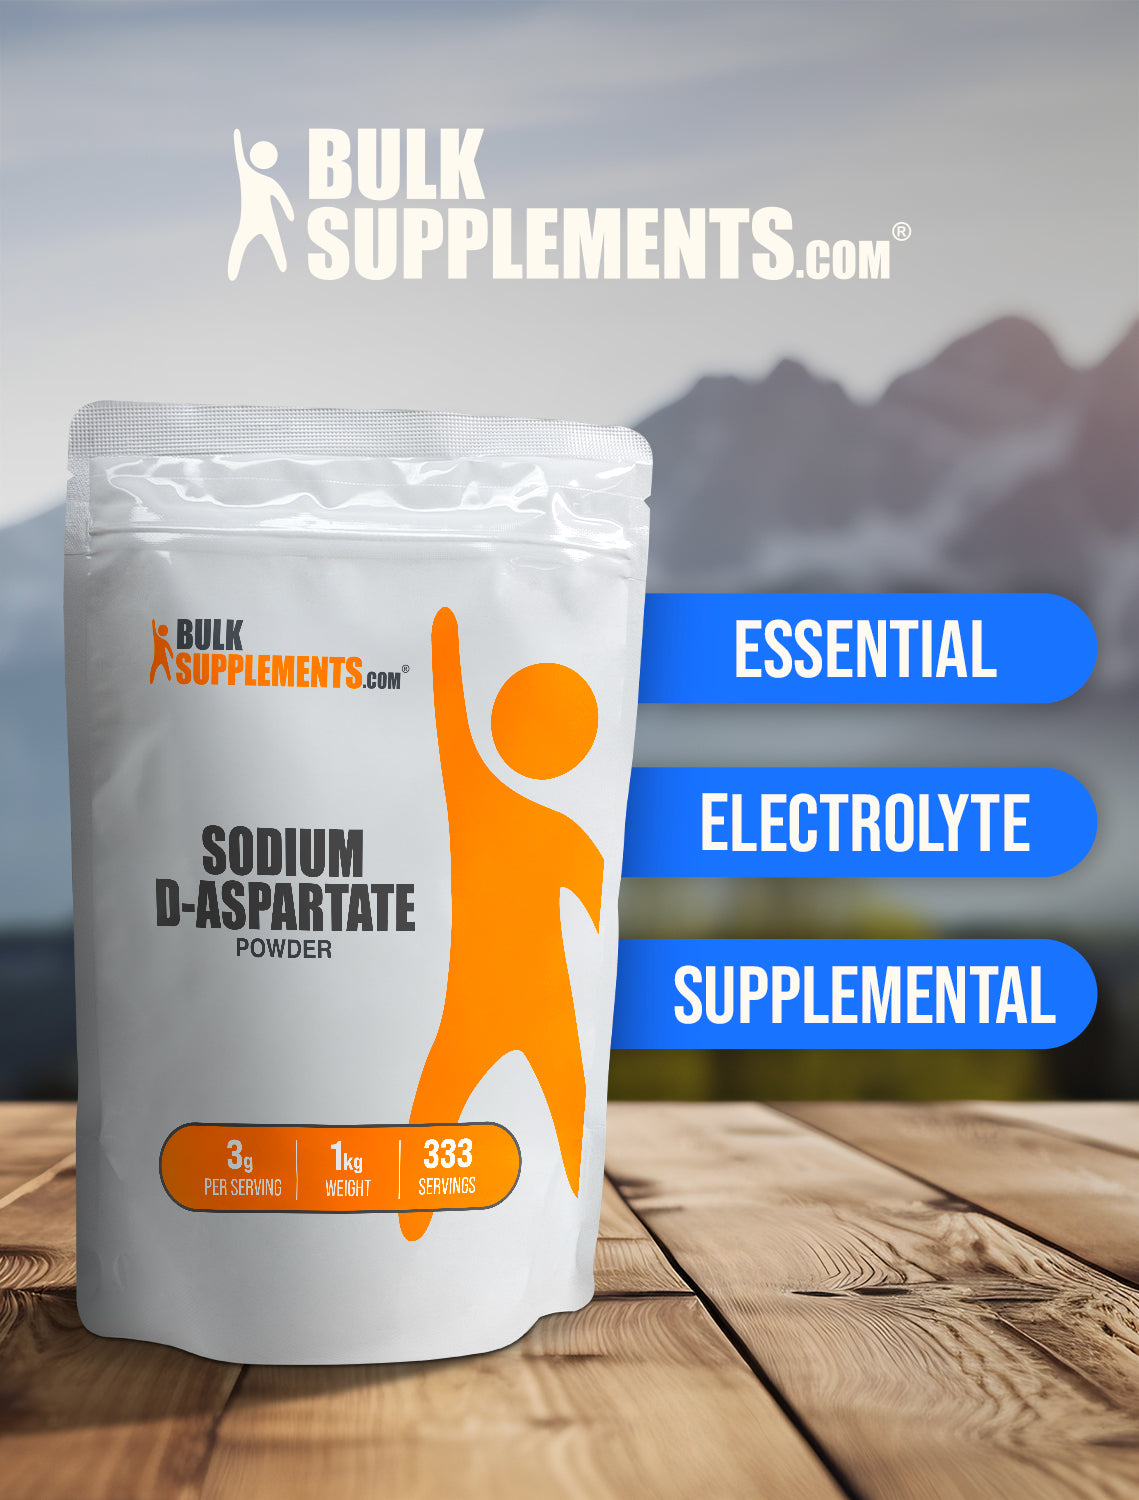 Sodium D-Aspartate powder keyword image 1kg